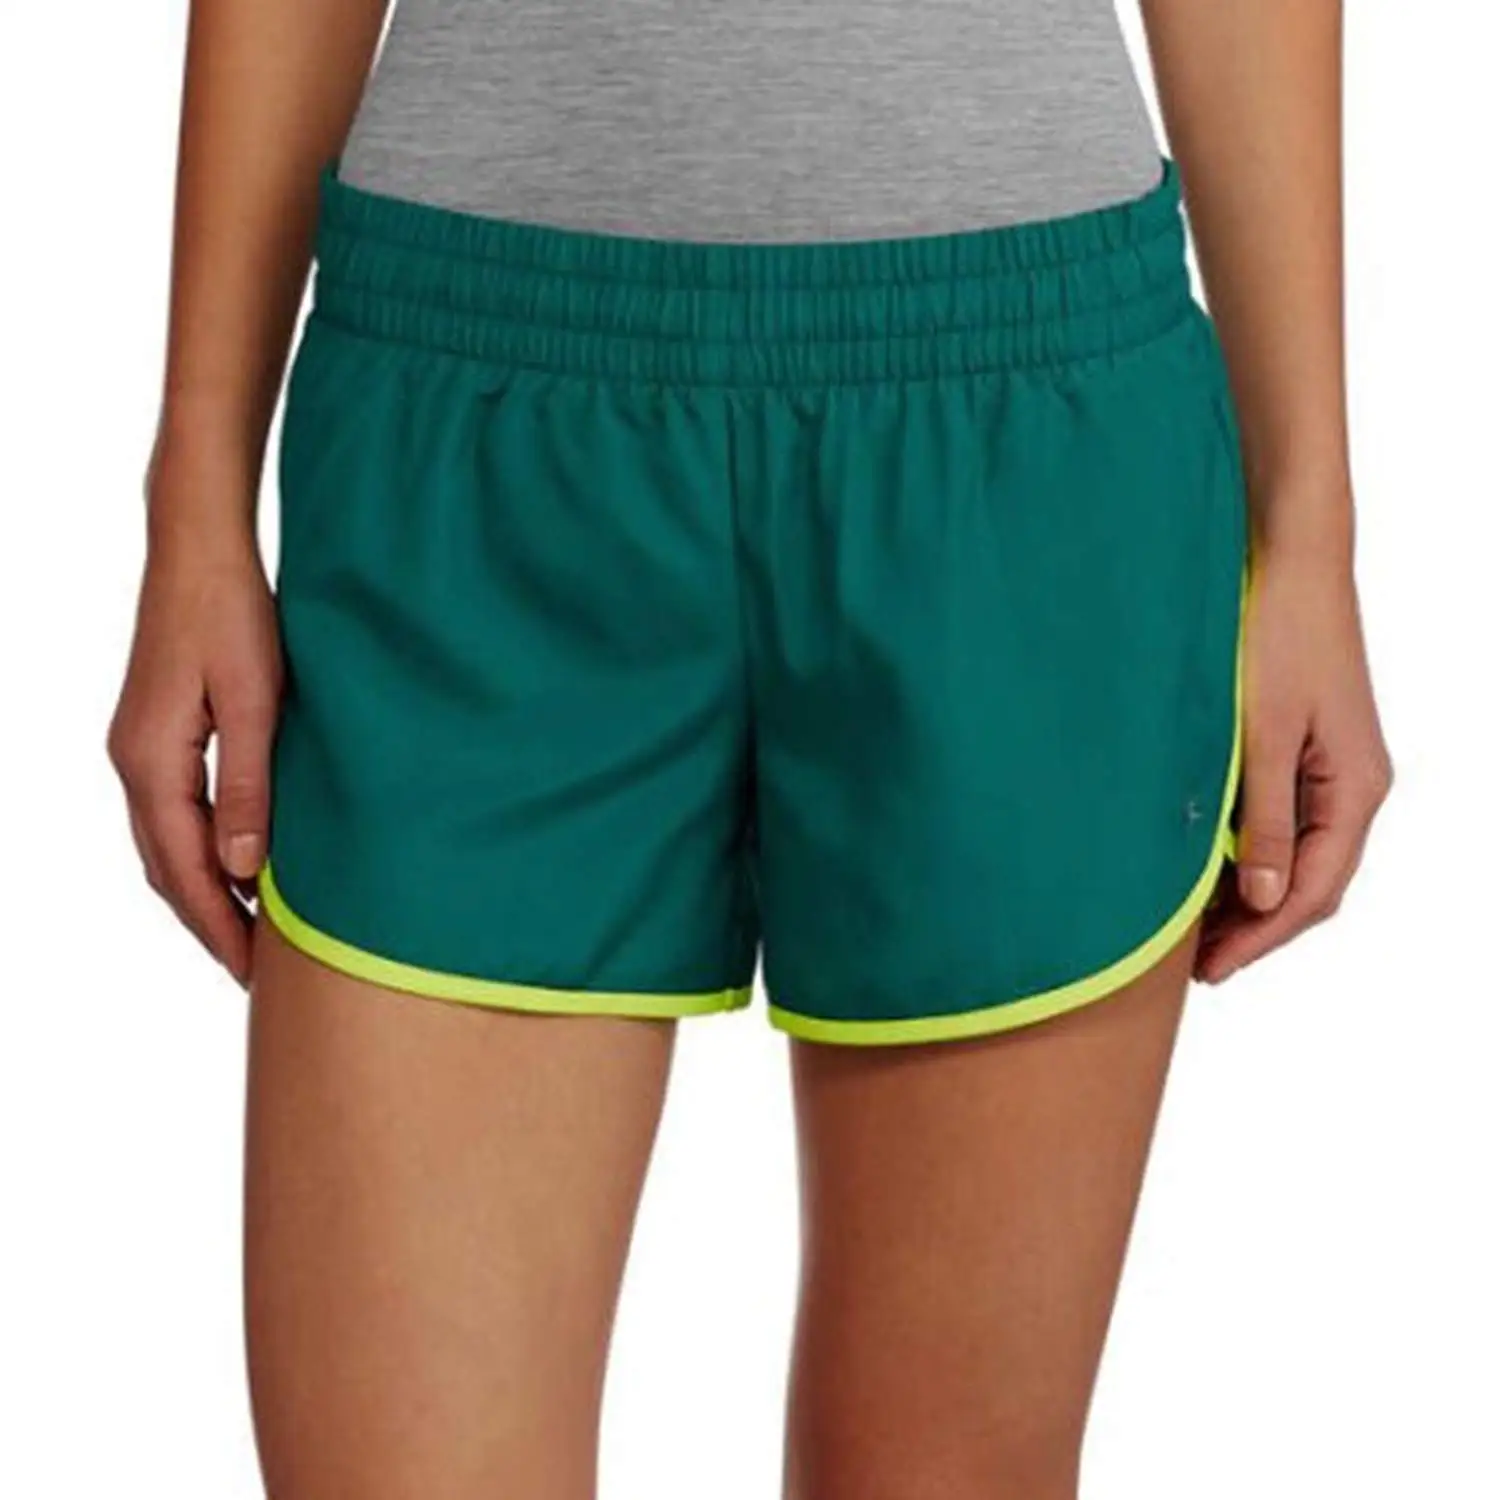 danskin running shorts with liner